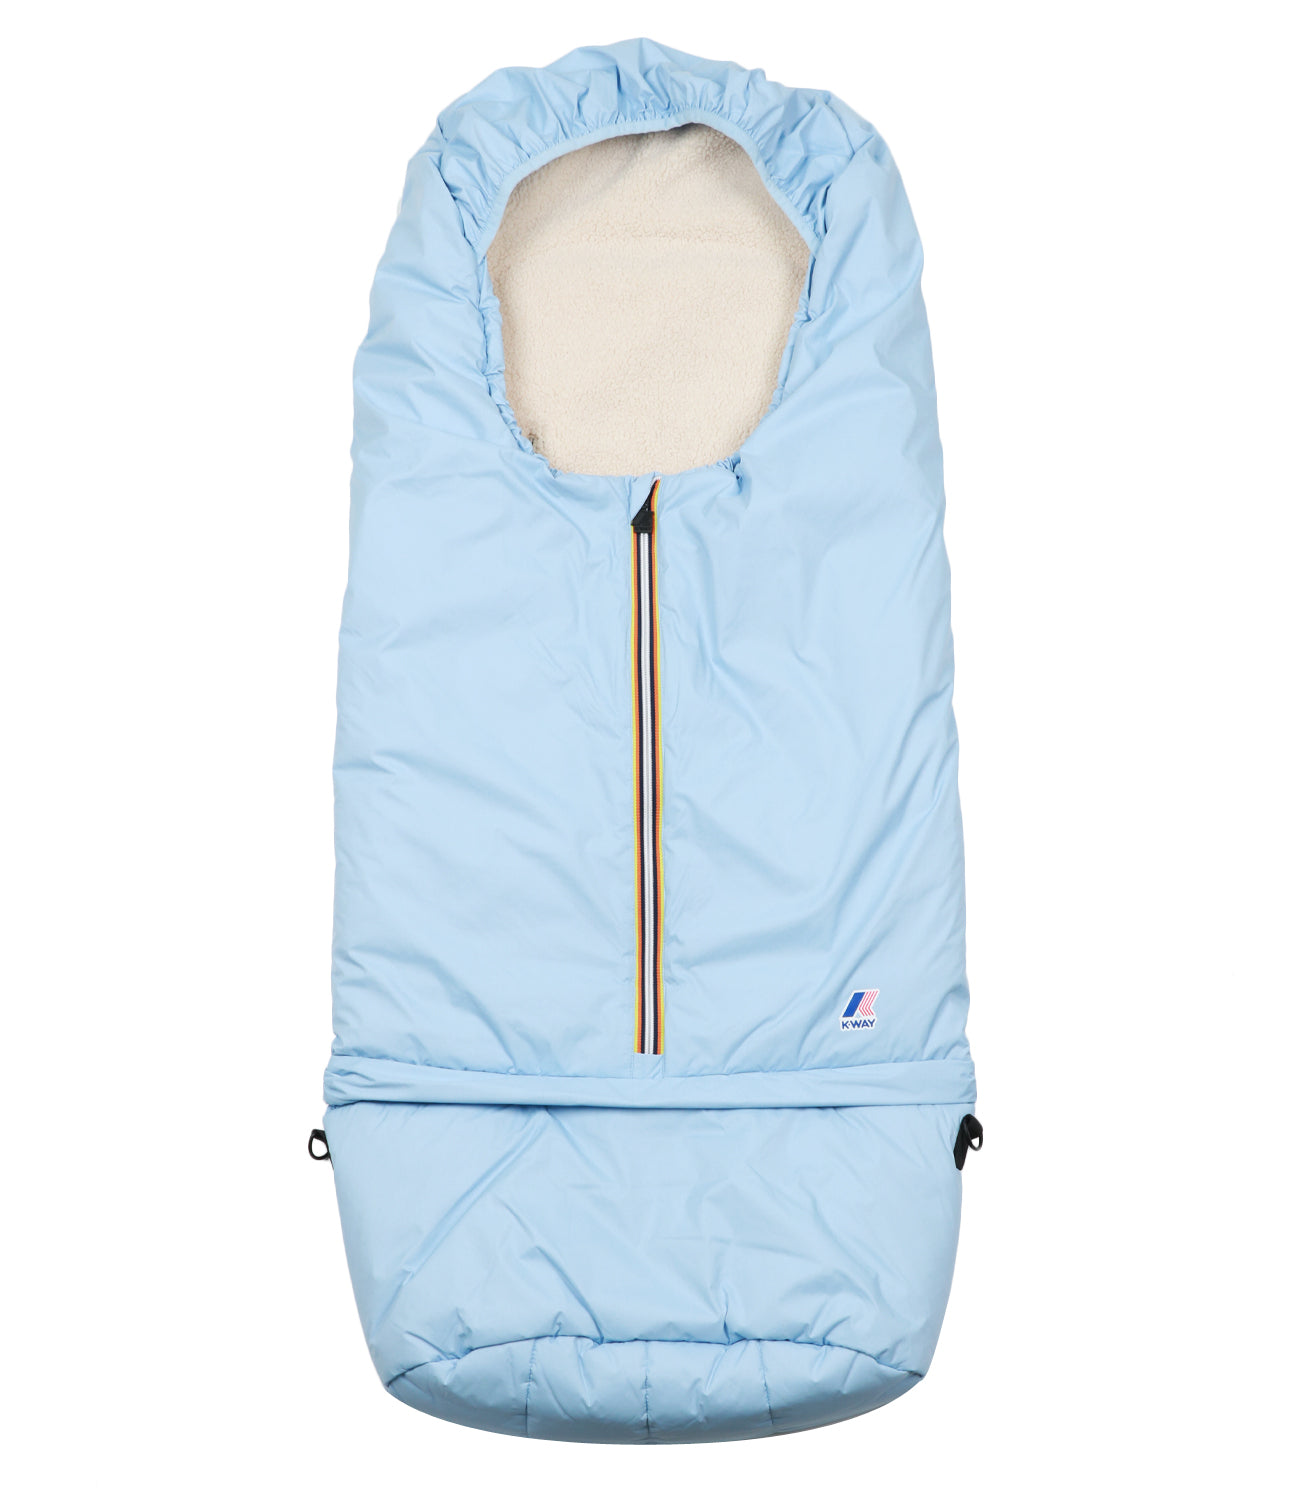 K-Way Kids | Baby Carrier Bag Le Vrai 3.0 Nourine Bear Ecru and Light Blue